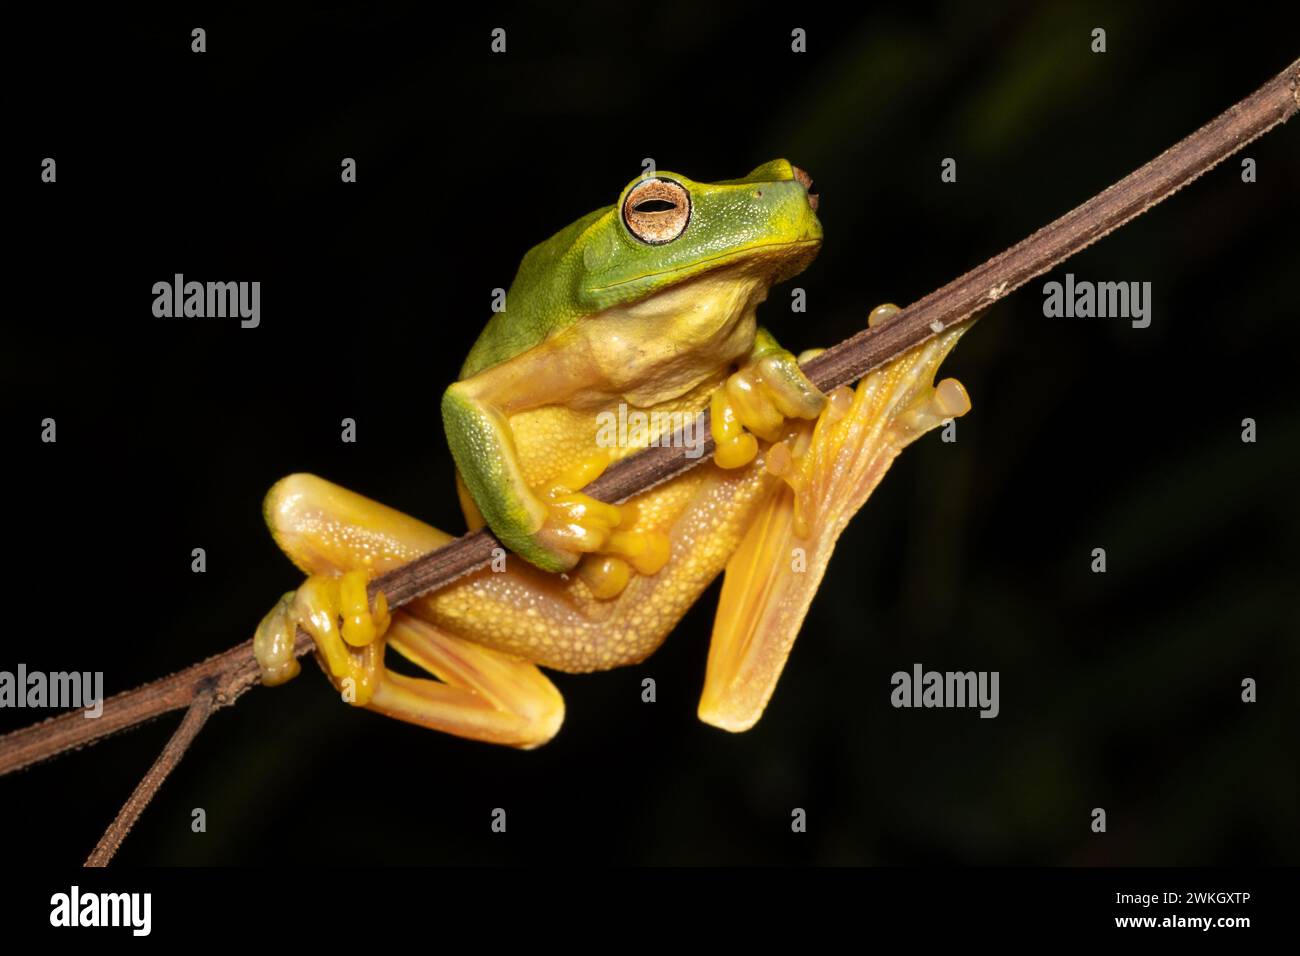 Australian Dainty Tree Frog resting on tree branch Stock Photo